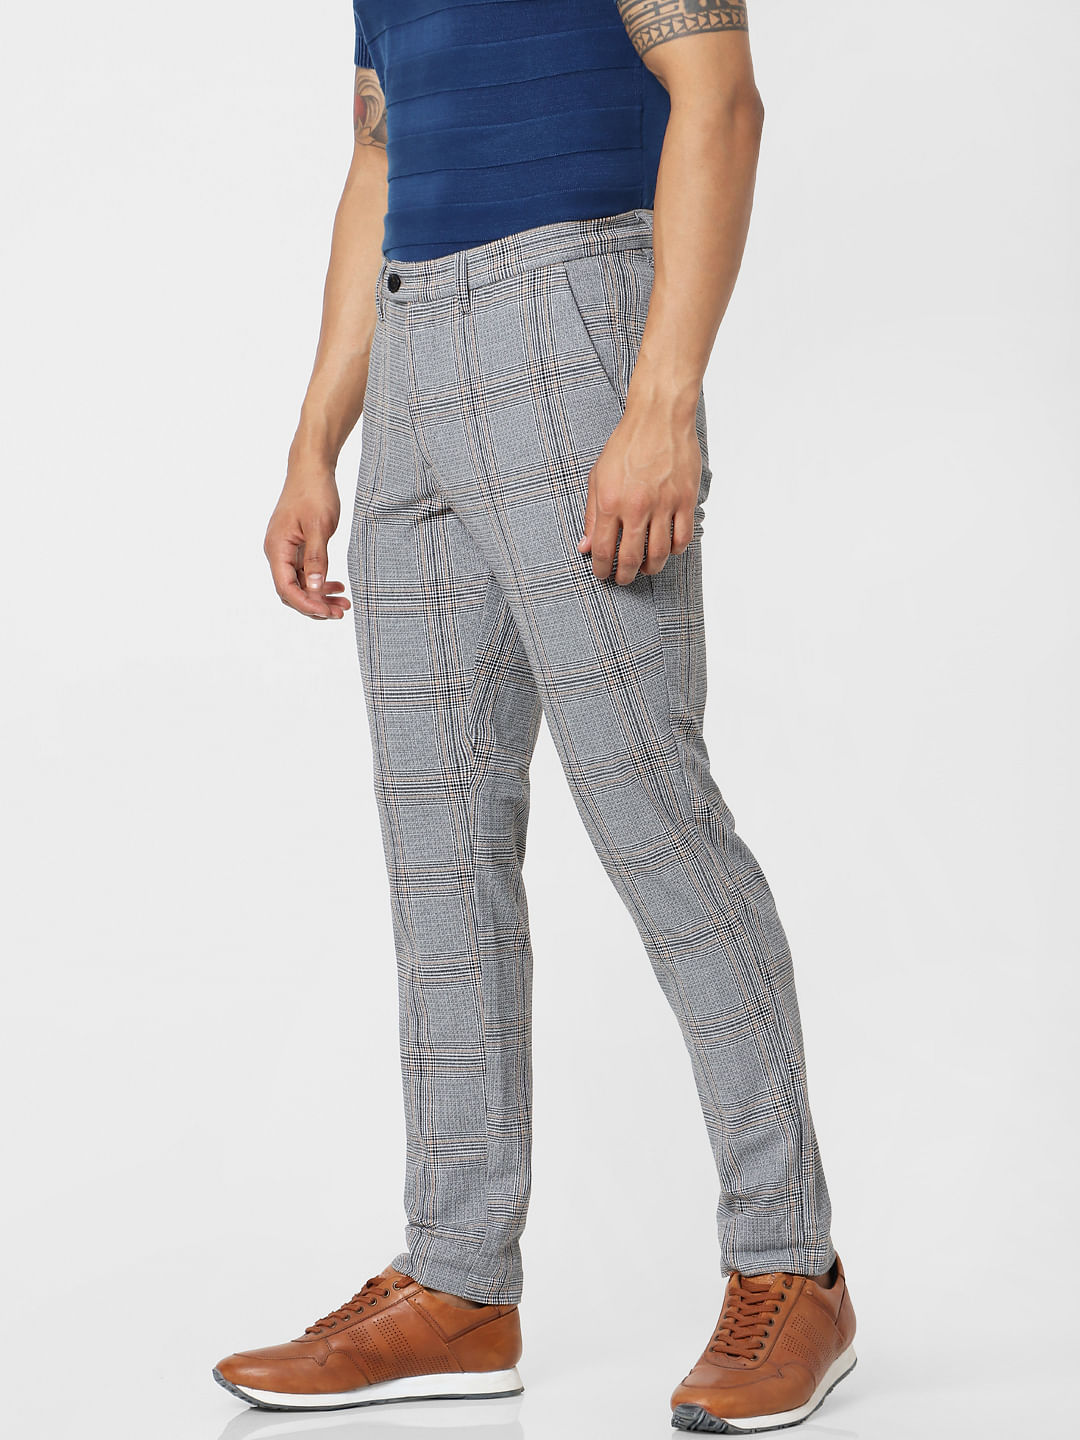 Buy Black  Grey Trousers  Pants for Men by Jack  Jones Online  Ajiocom